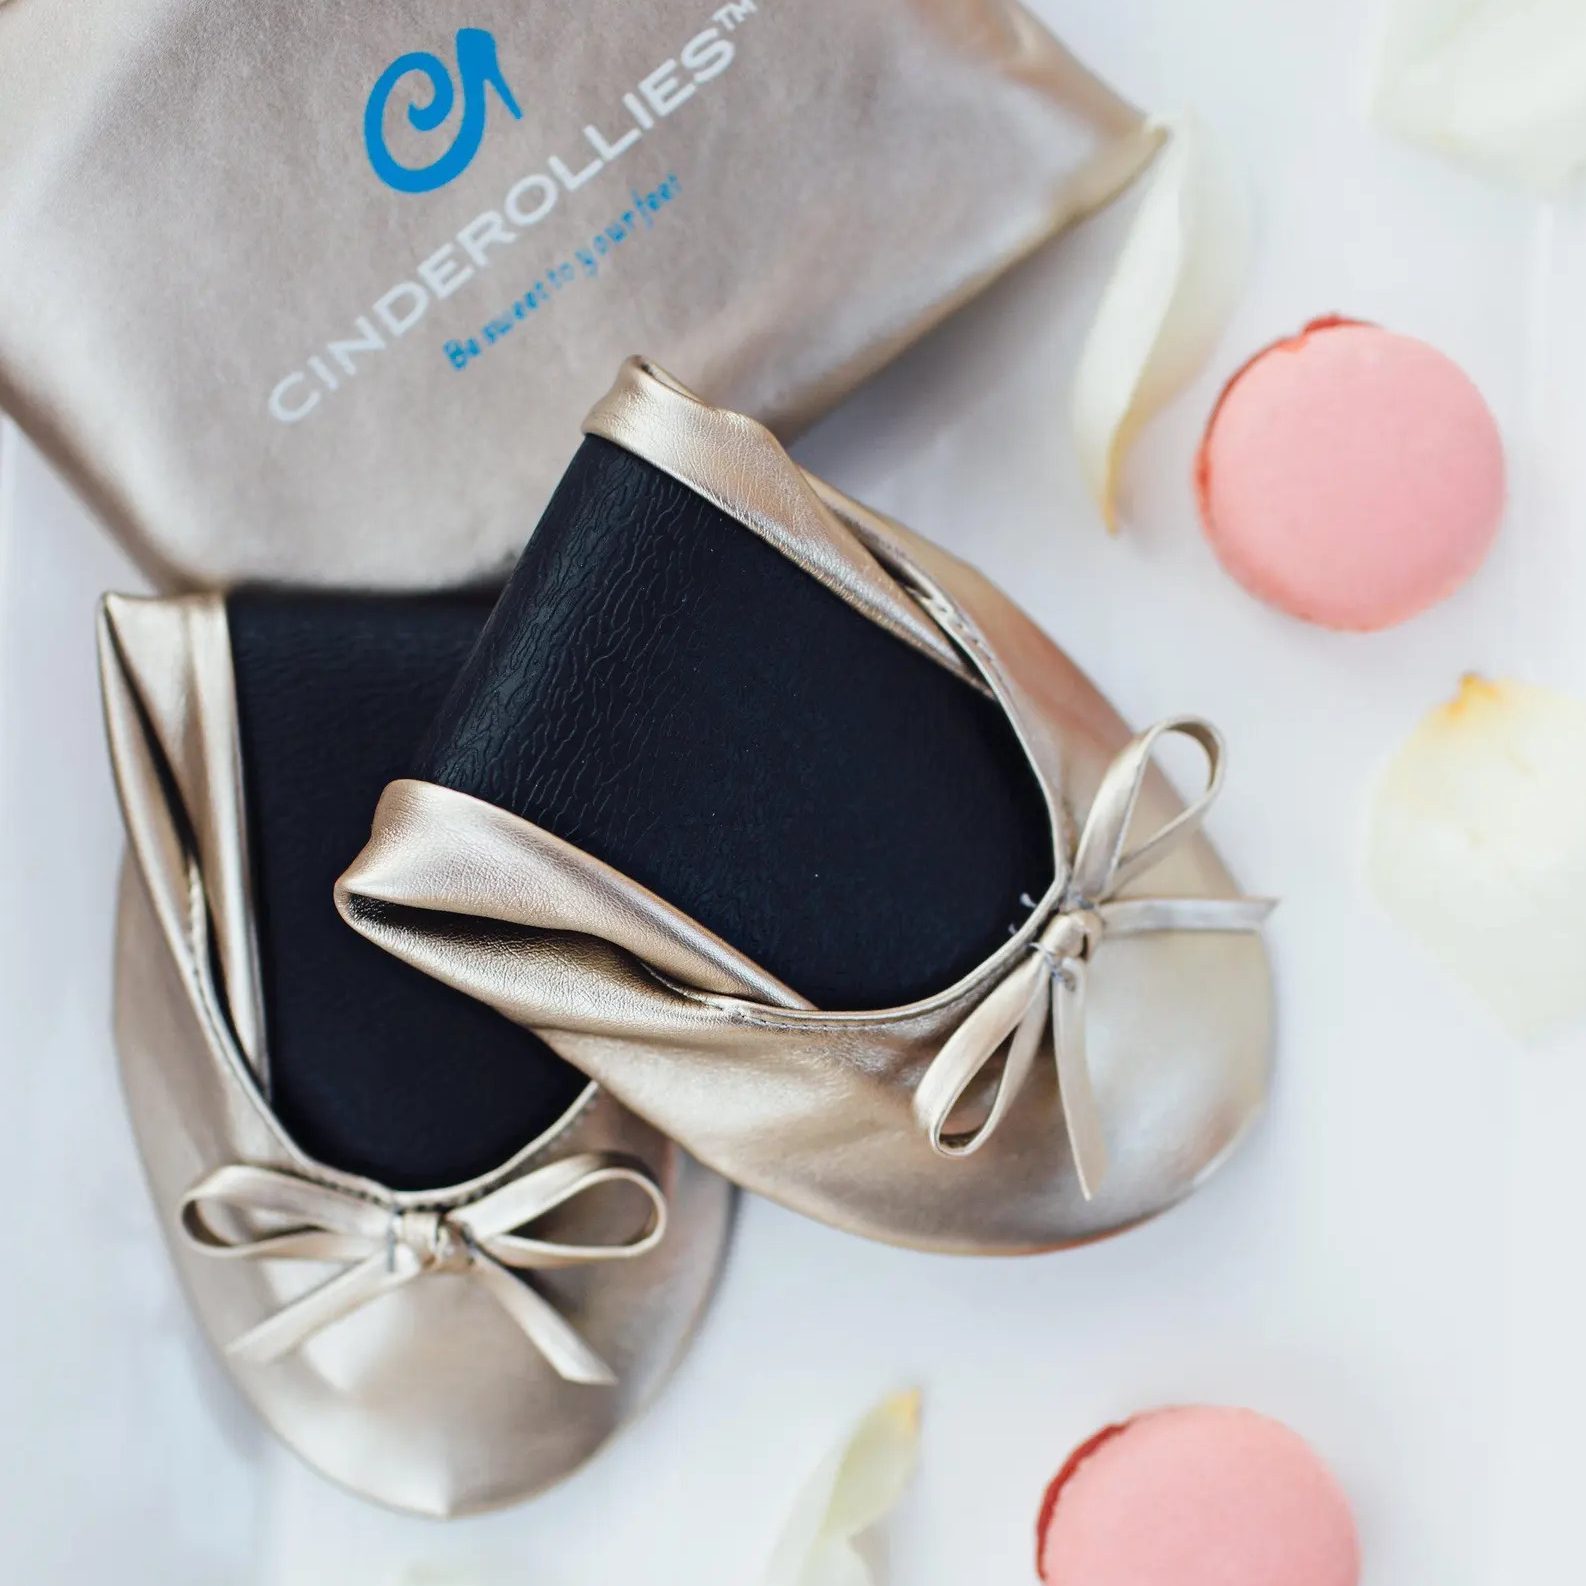 Cinderollies Bridal Slipper Wedding Ecomm Via Etsy.com